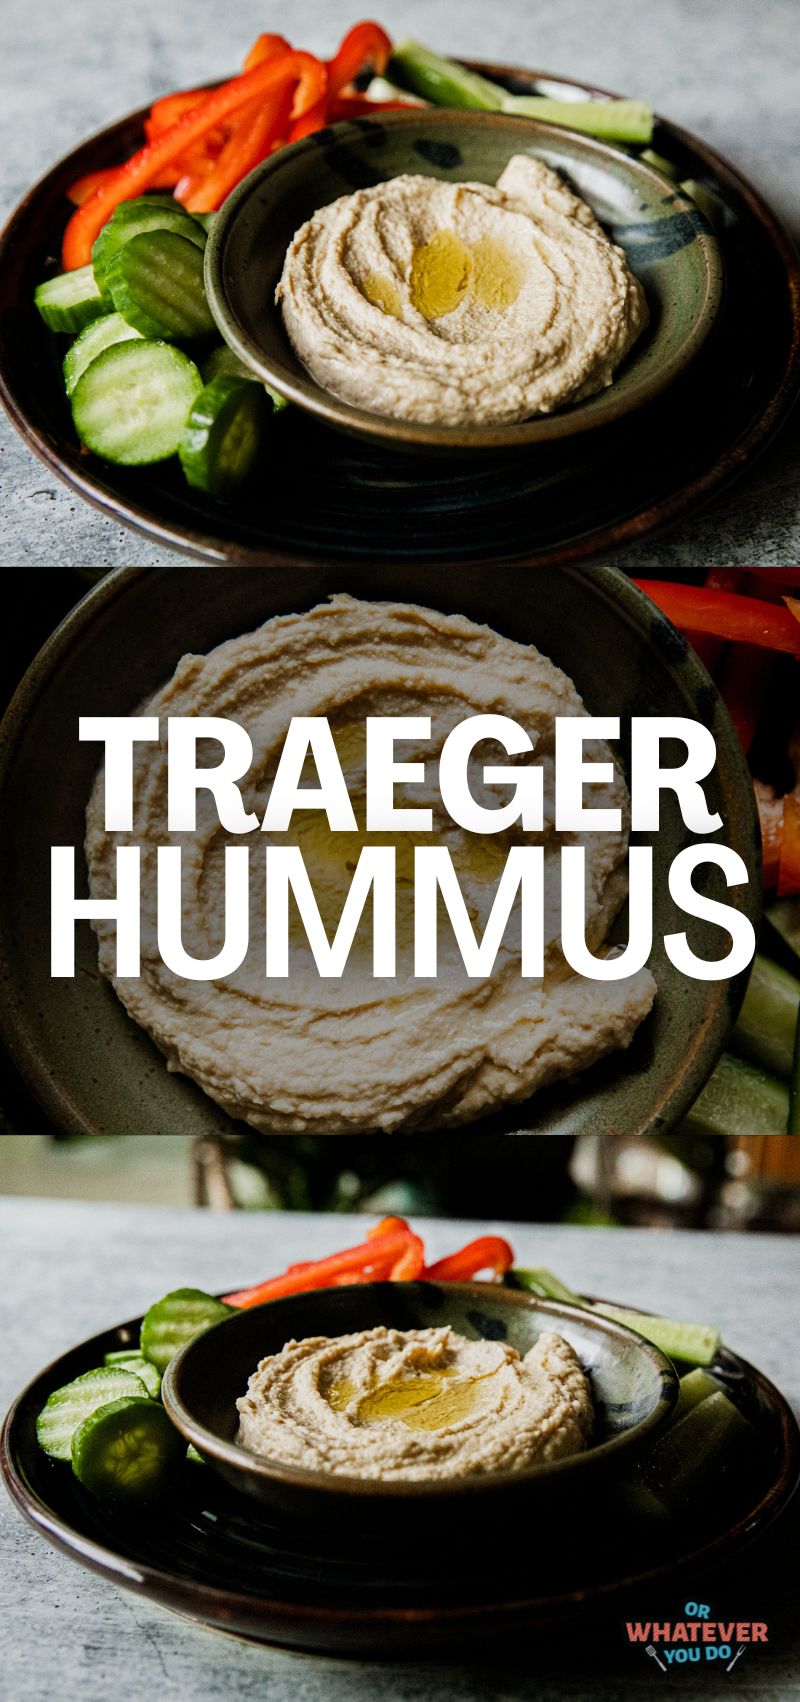 Traeger Hummus